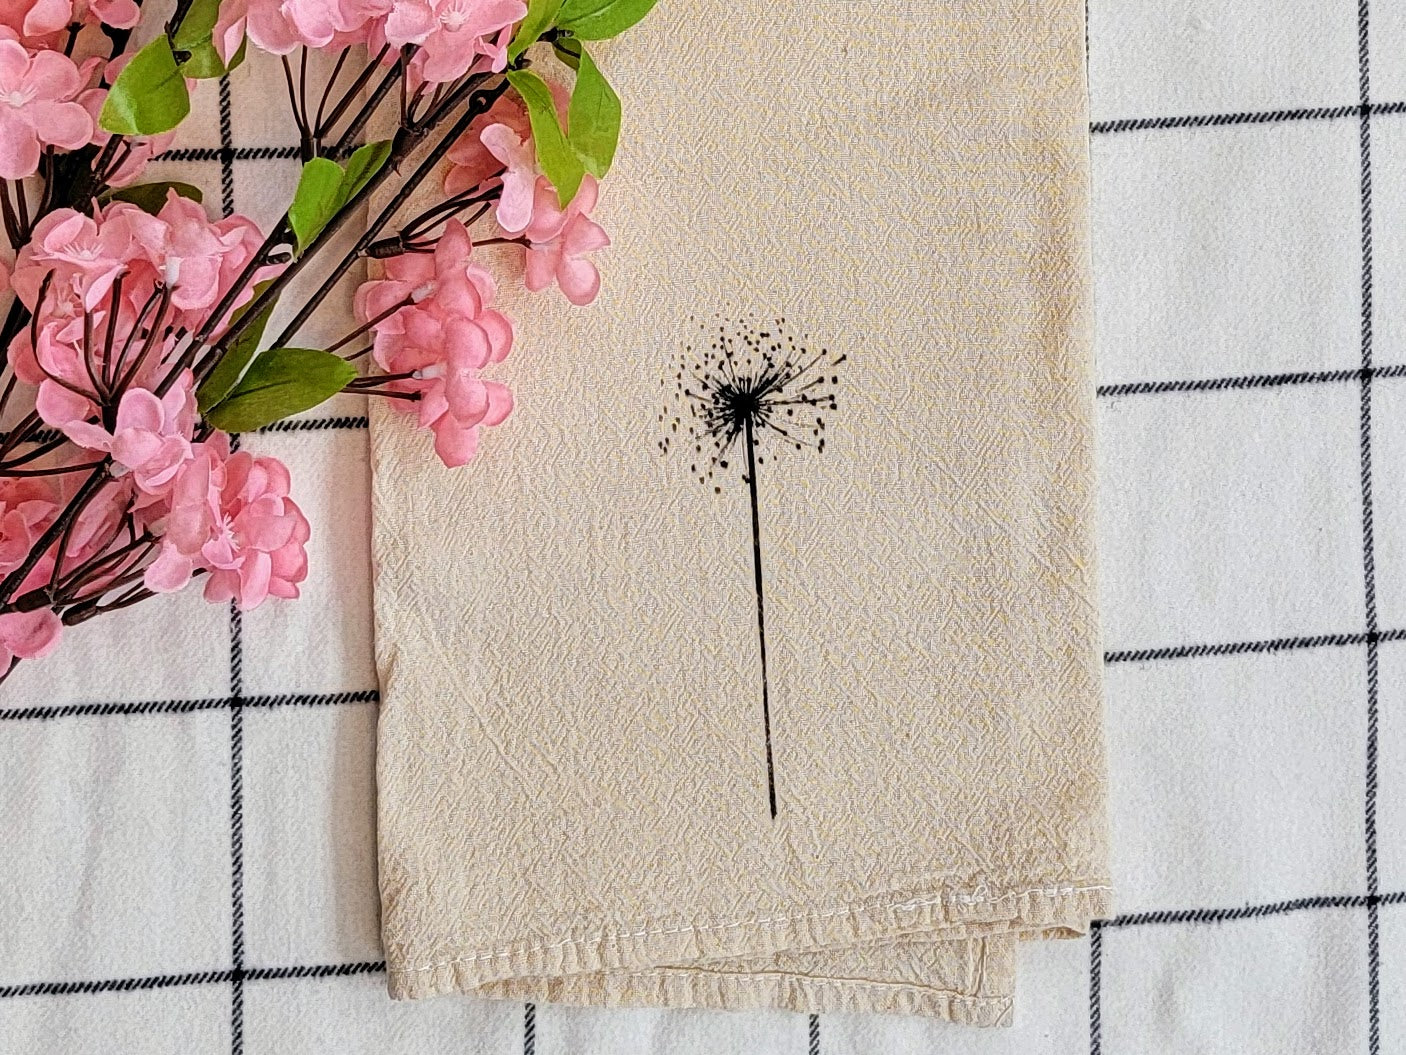 Dandelion Screen Printed Tea Towel - Landscape Close Up Shot